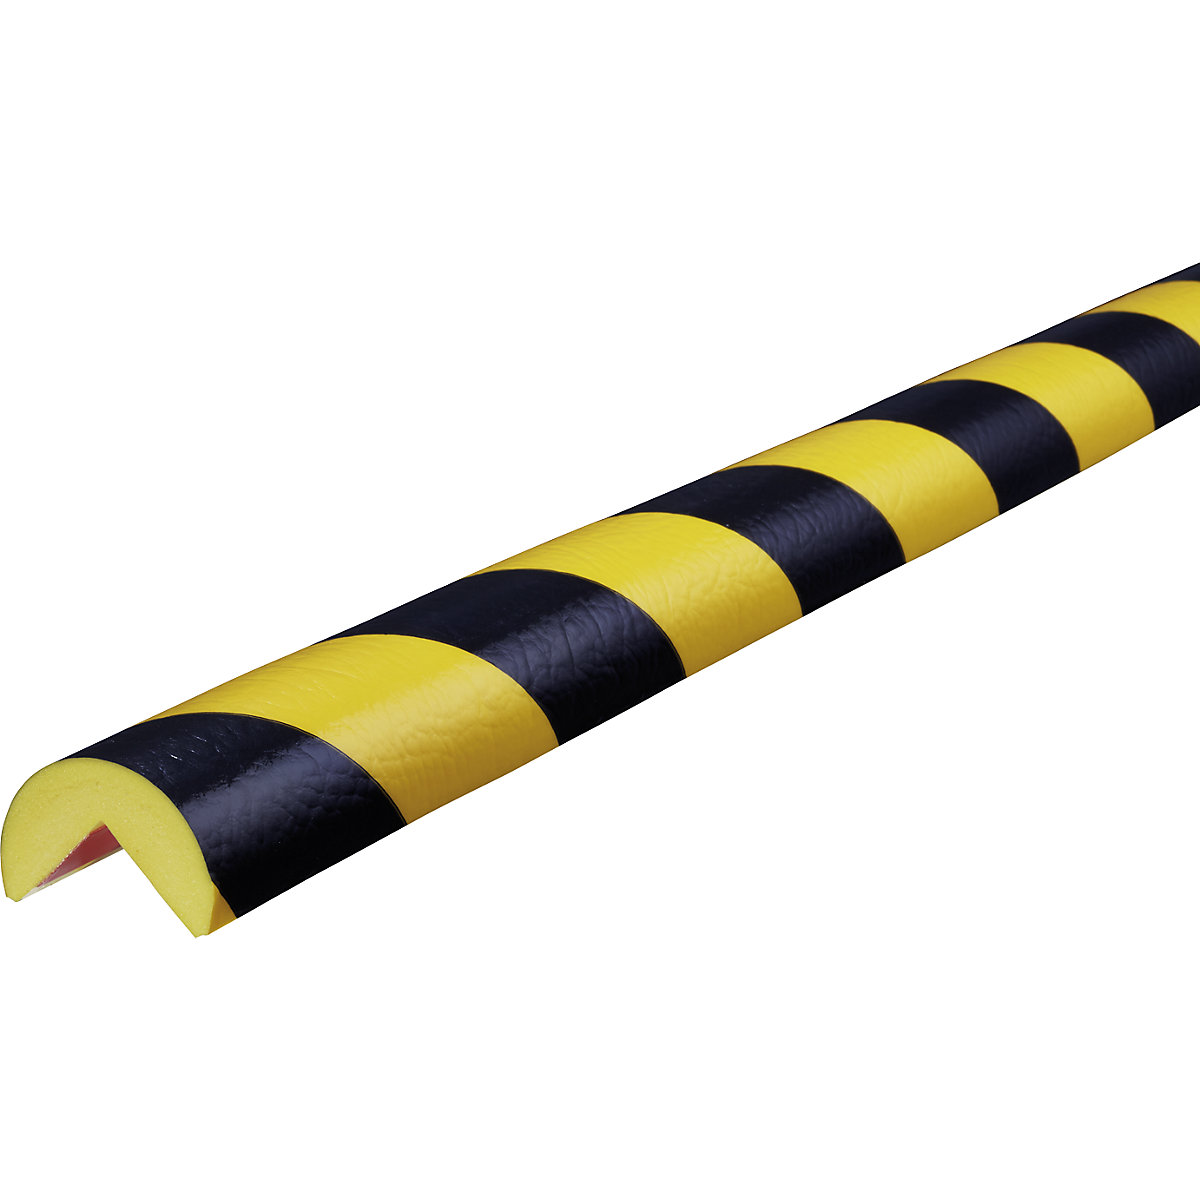 Knuffi® corner protection – SHG, type A, 1 x 5 m roll, black / yellow-17